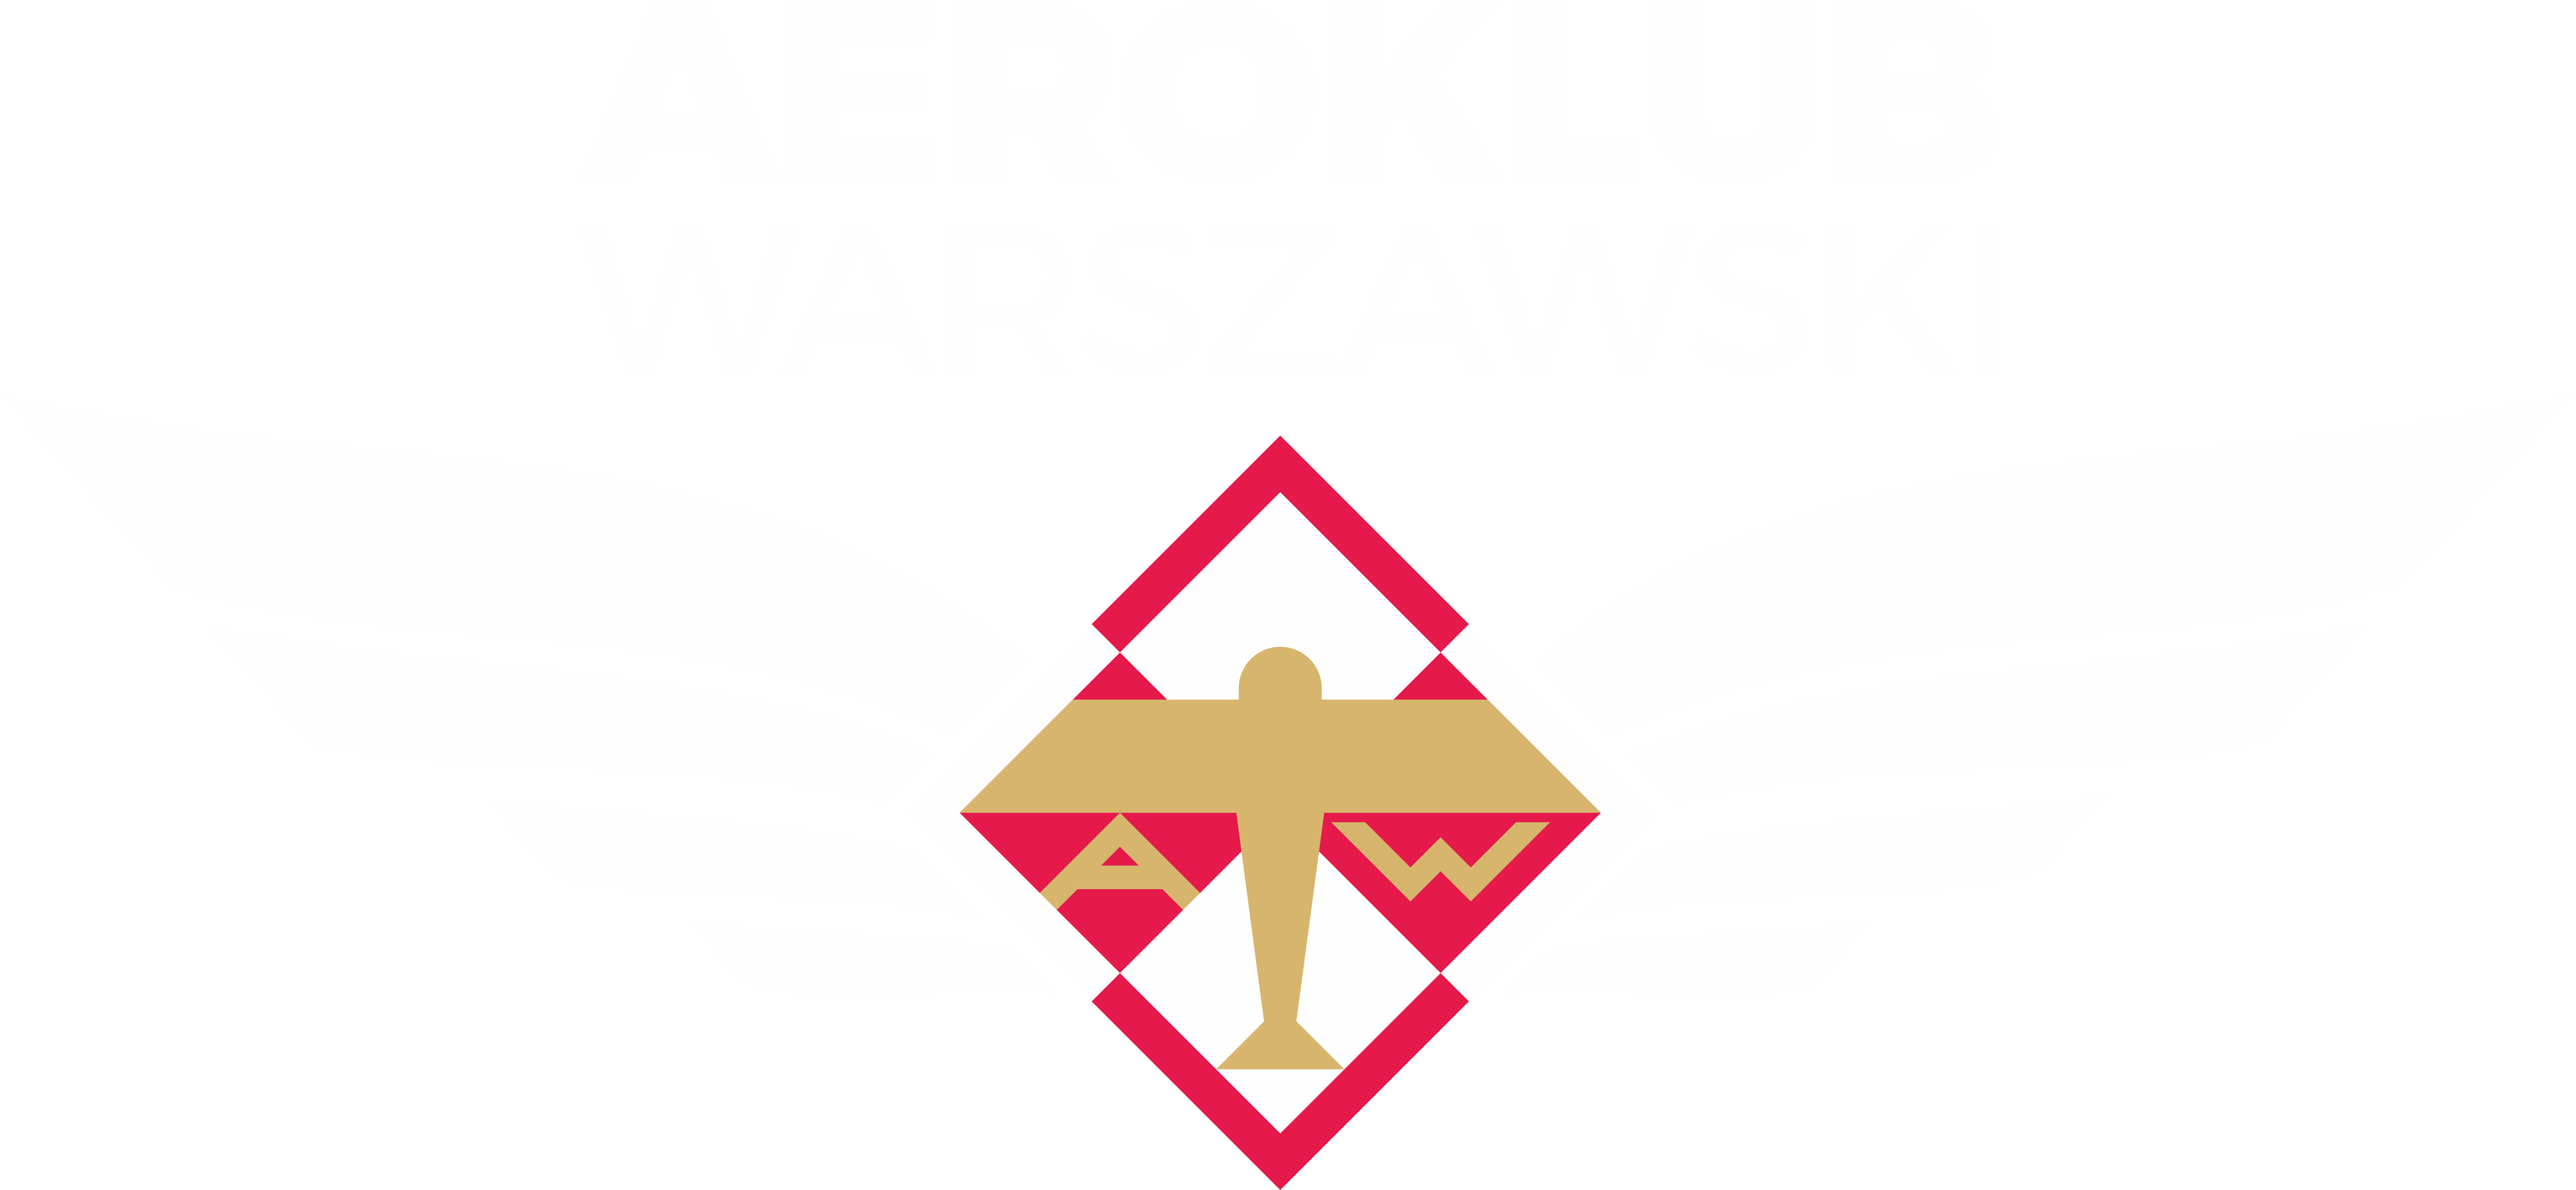 Aeroklub Warszawski